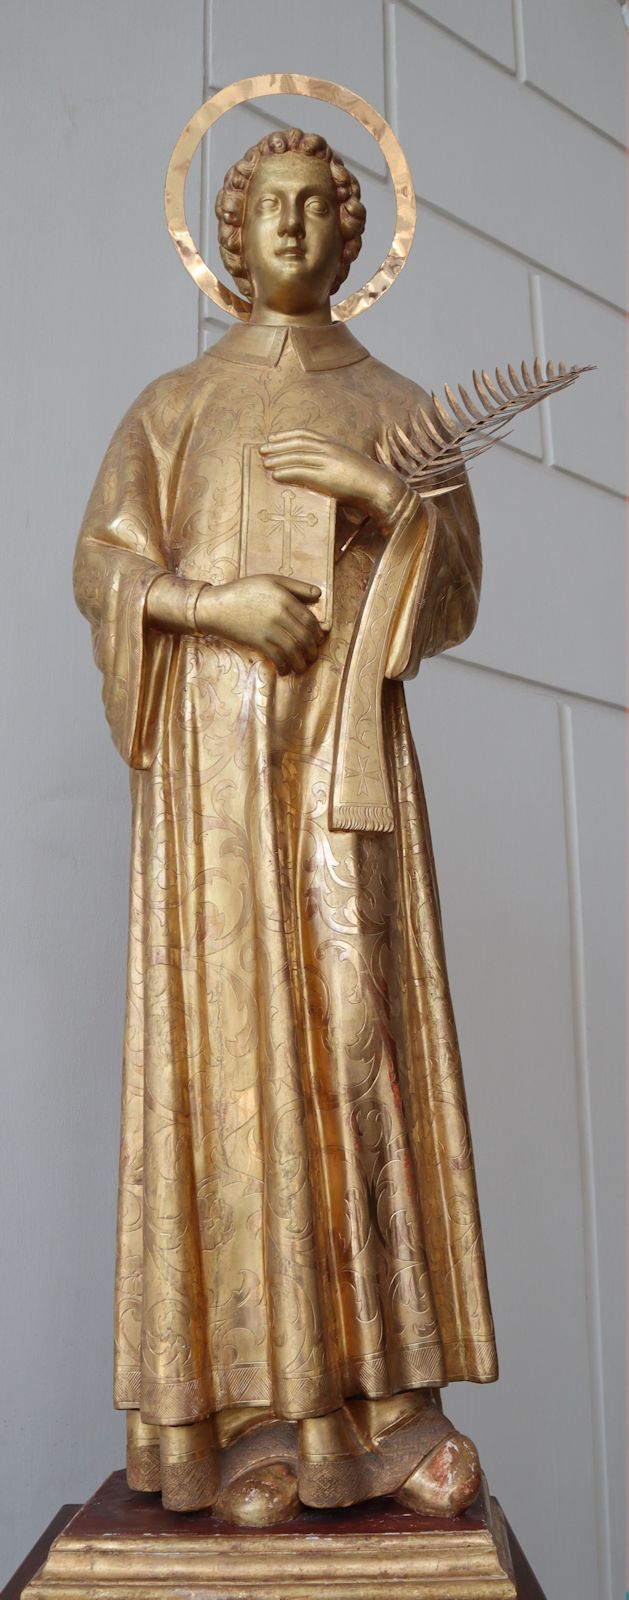 Statue in der Kathedrale in Pozzuoli